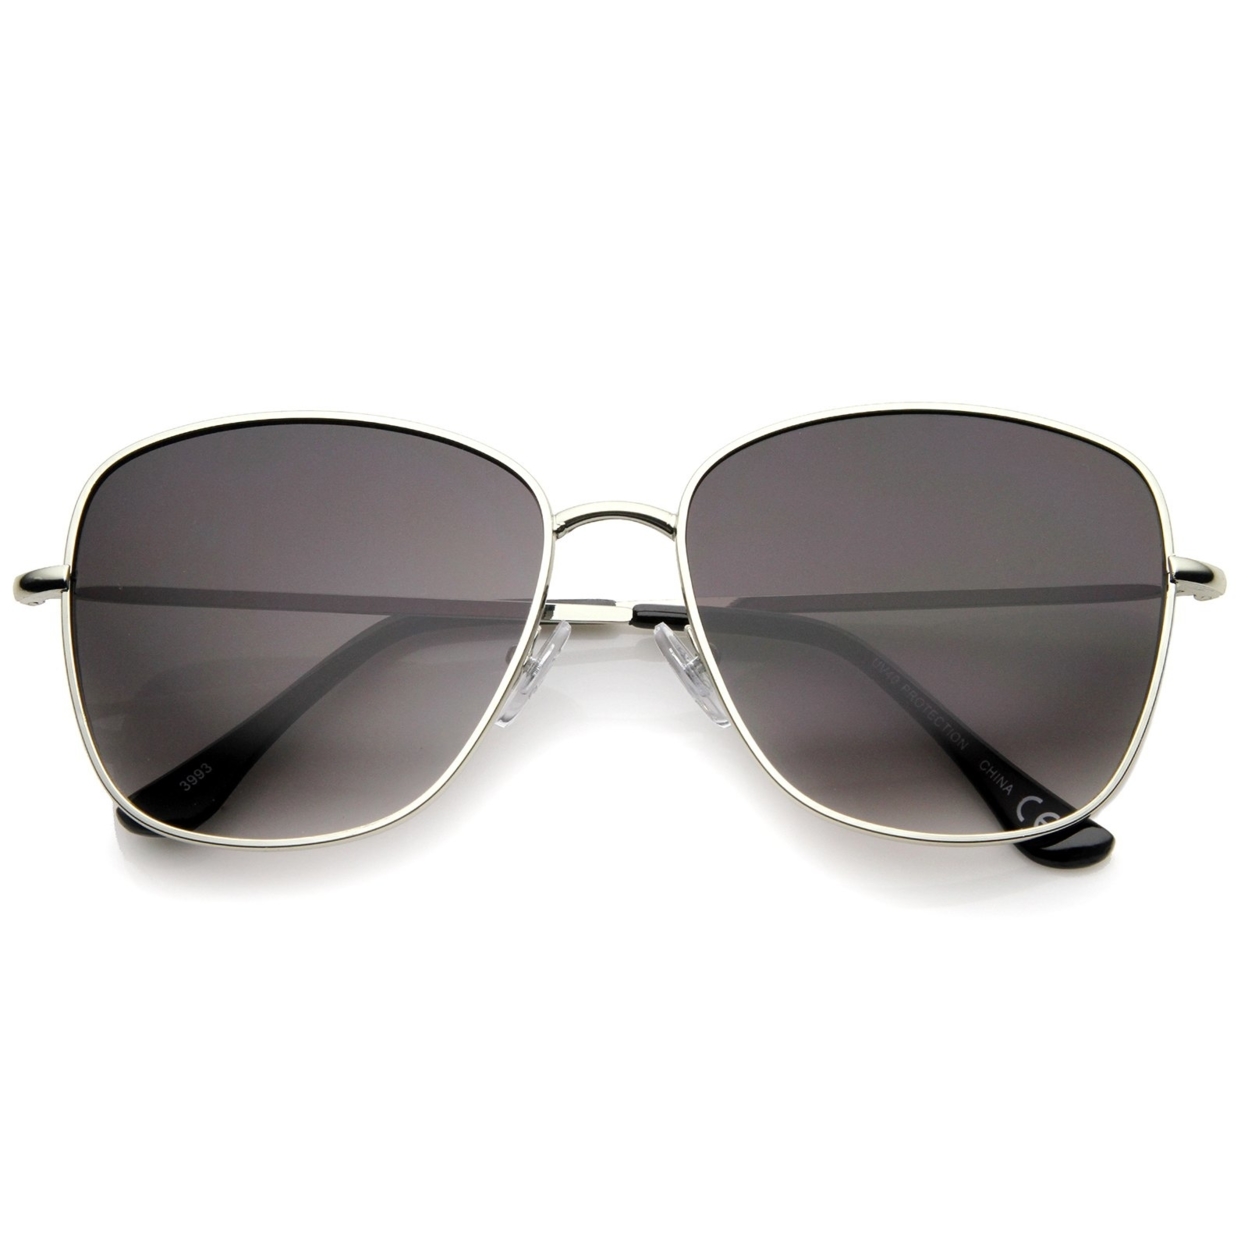 Contemporary Modern Fashion Full Metal Slim Temple Square Sunglasses 57mm - Shiny Black / Lavender